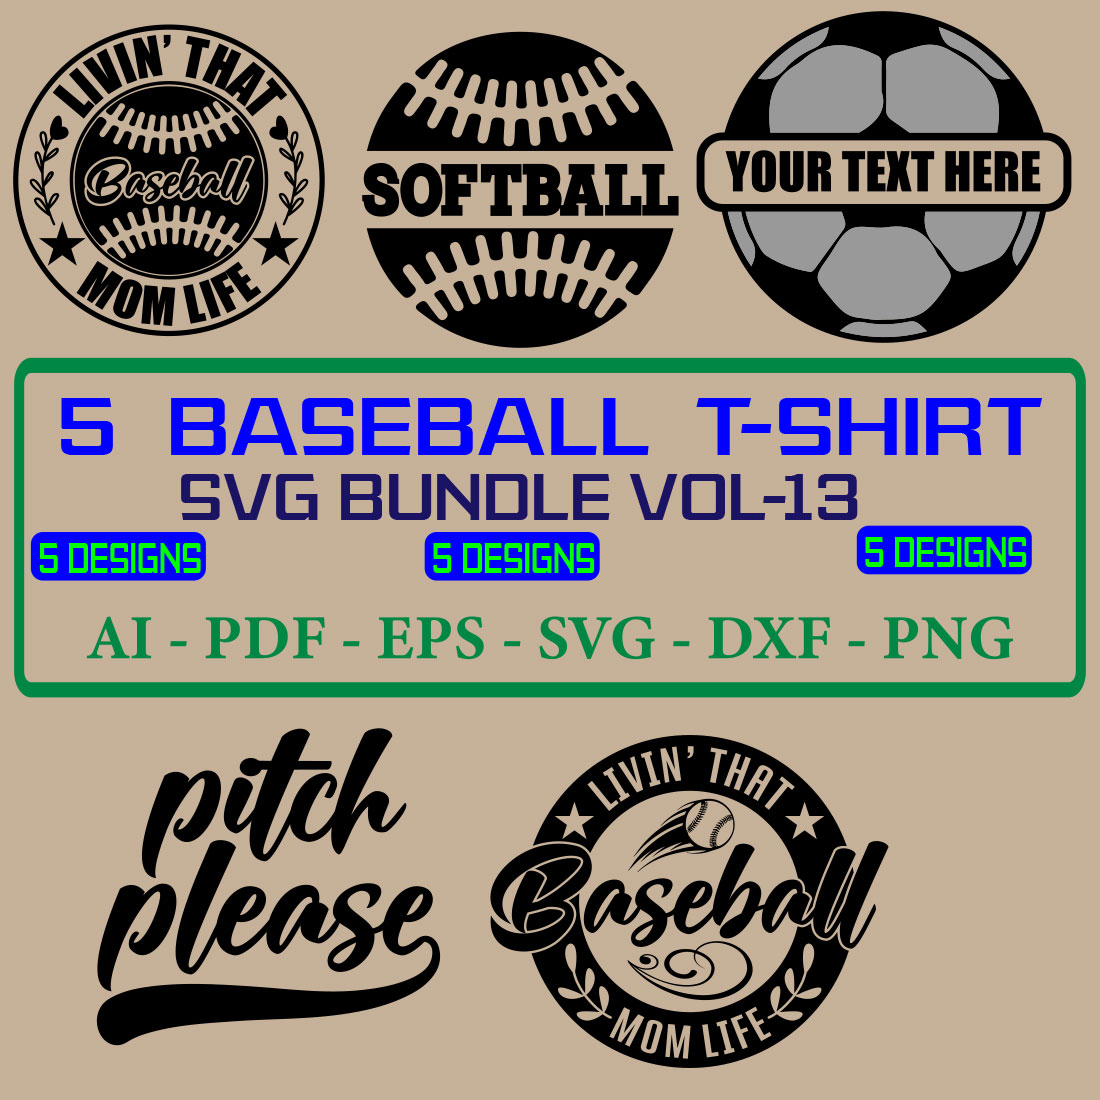 5 Baseball T-shirt SVG Bundle Vol 13 cover image.